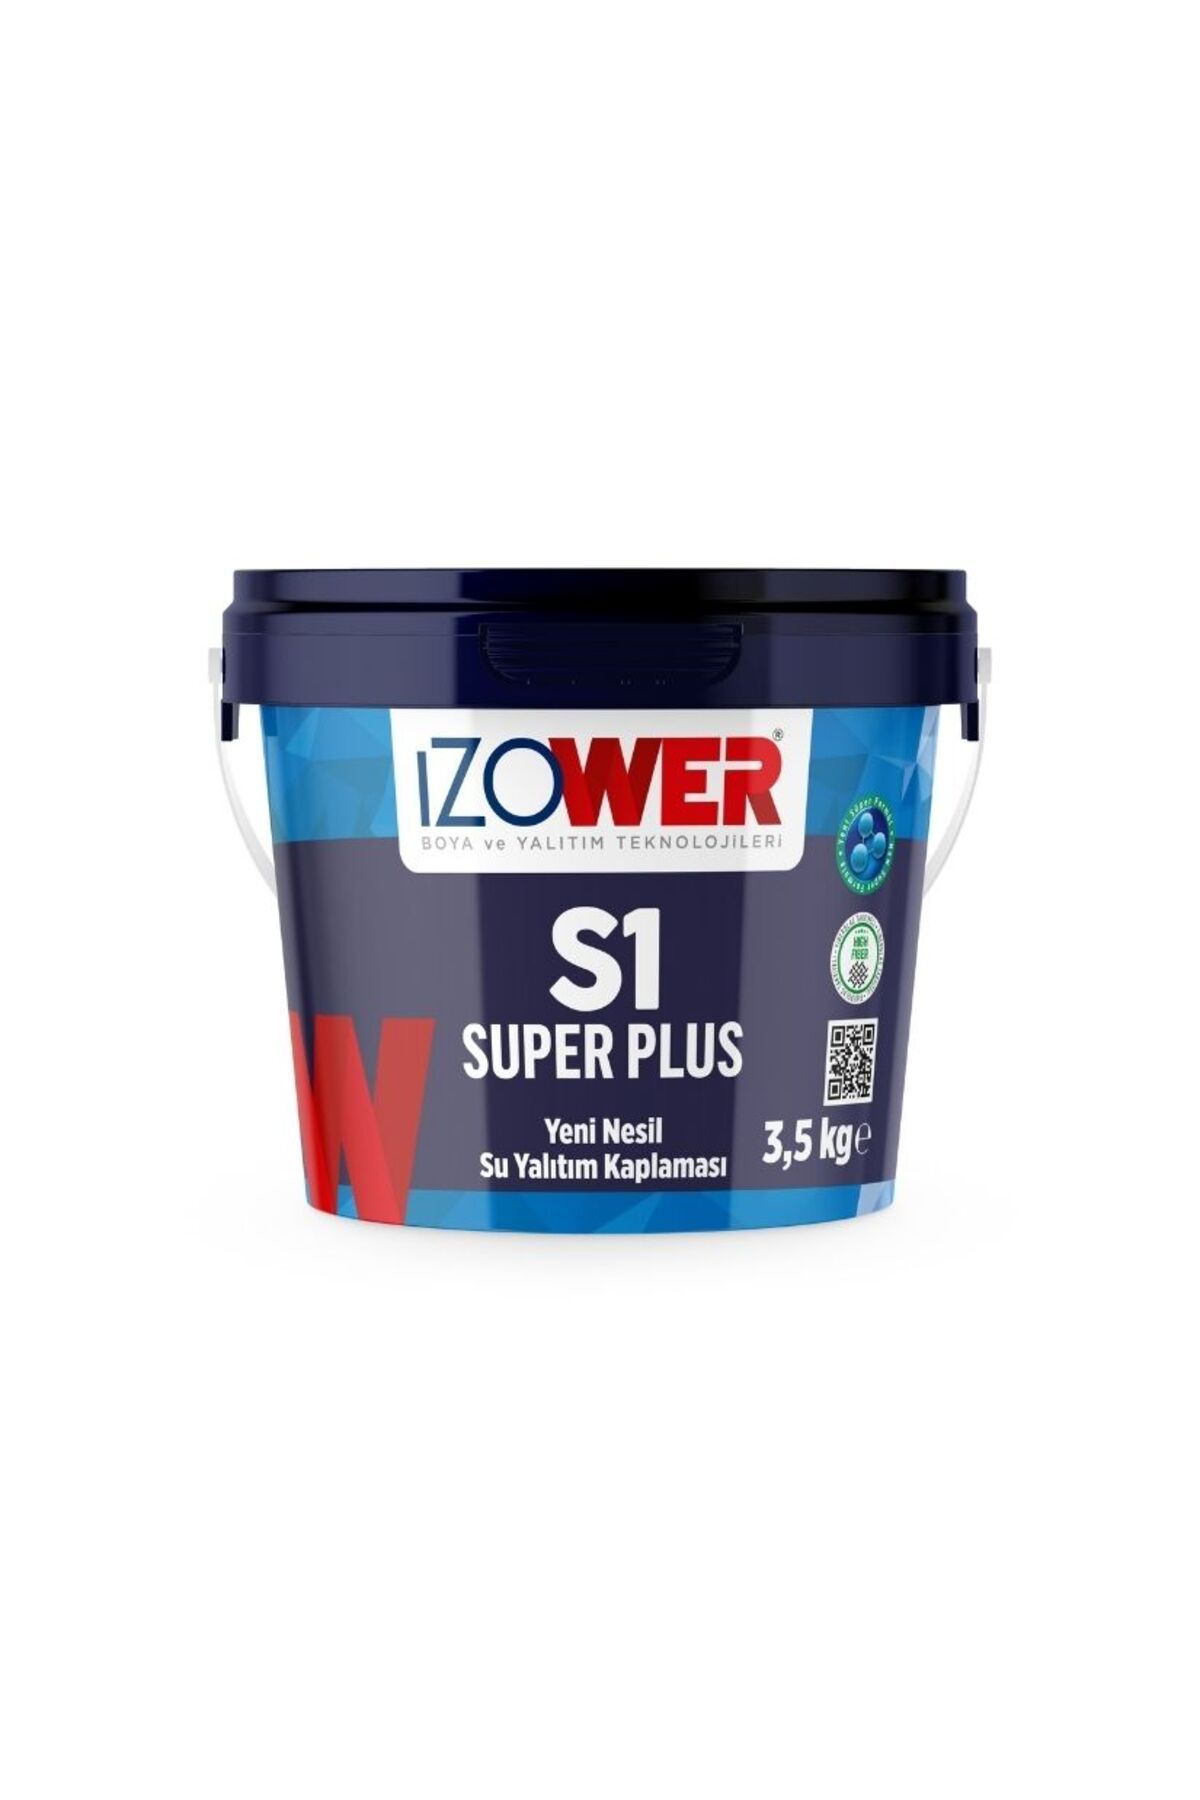 izower S1 Süper Plus Su Yalıtım Kaplaması- Kiremit Rengi- 3.5 Kg